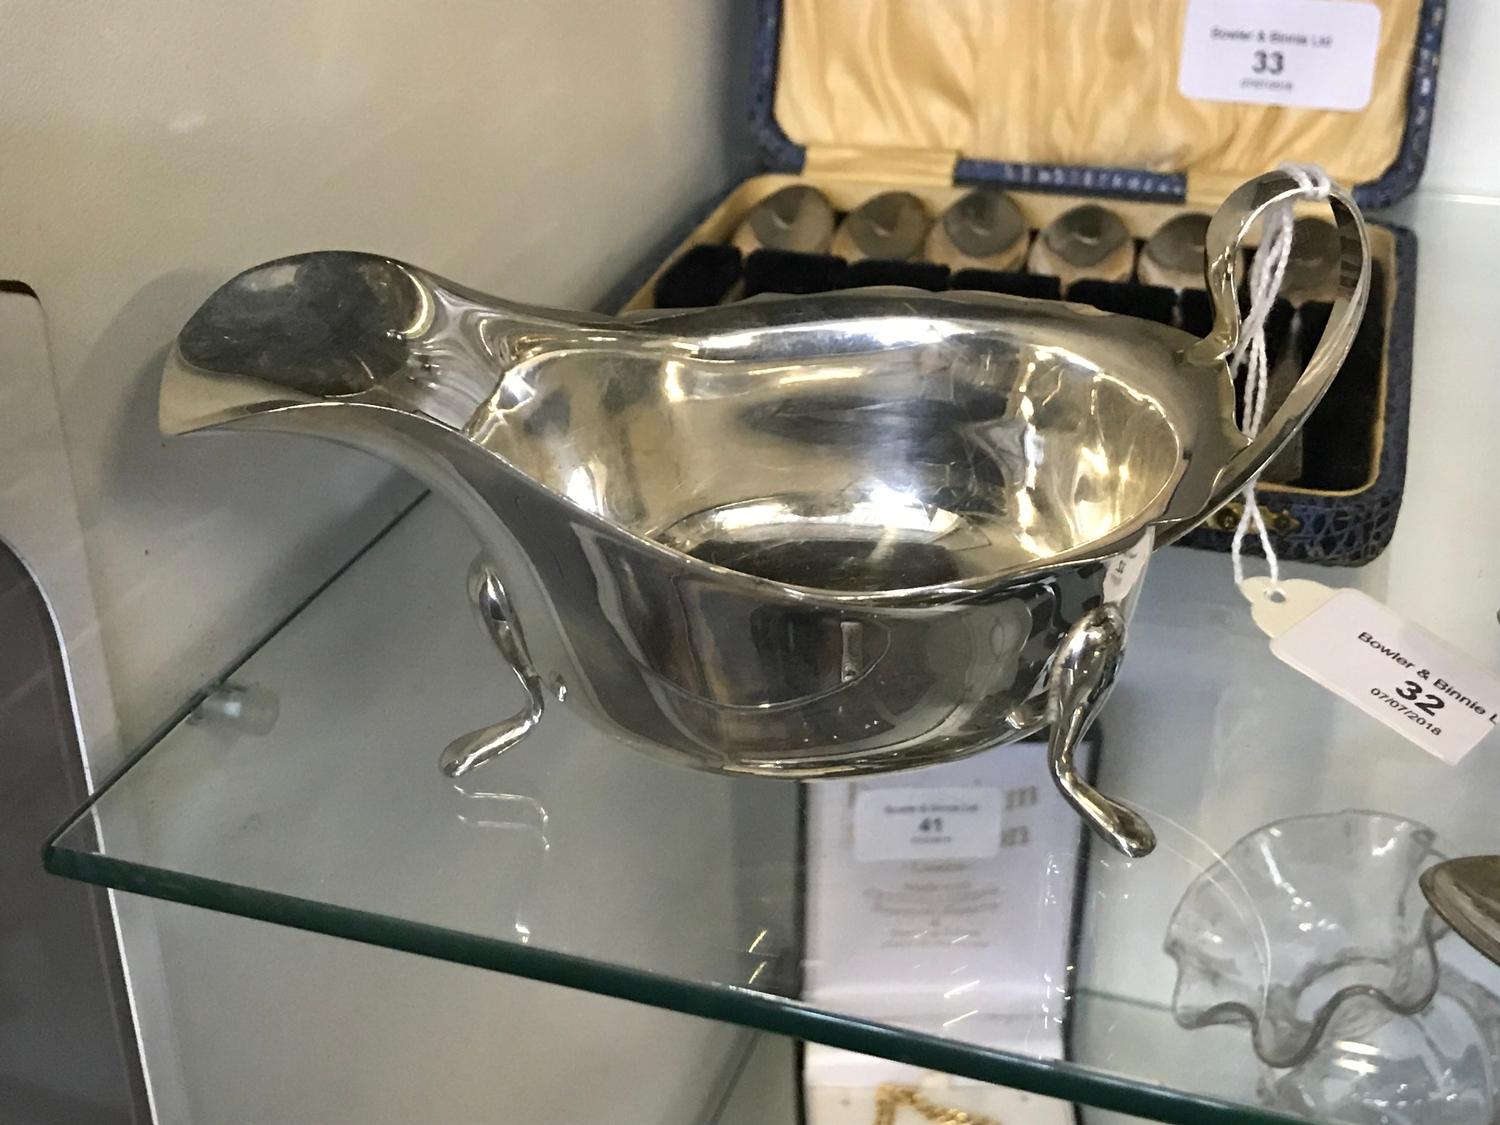 Sheffield silver 3 foot cream jug. Makers Viners Ltd, dated 1933.